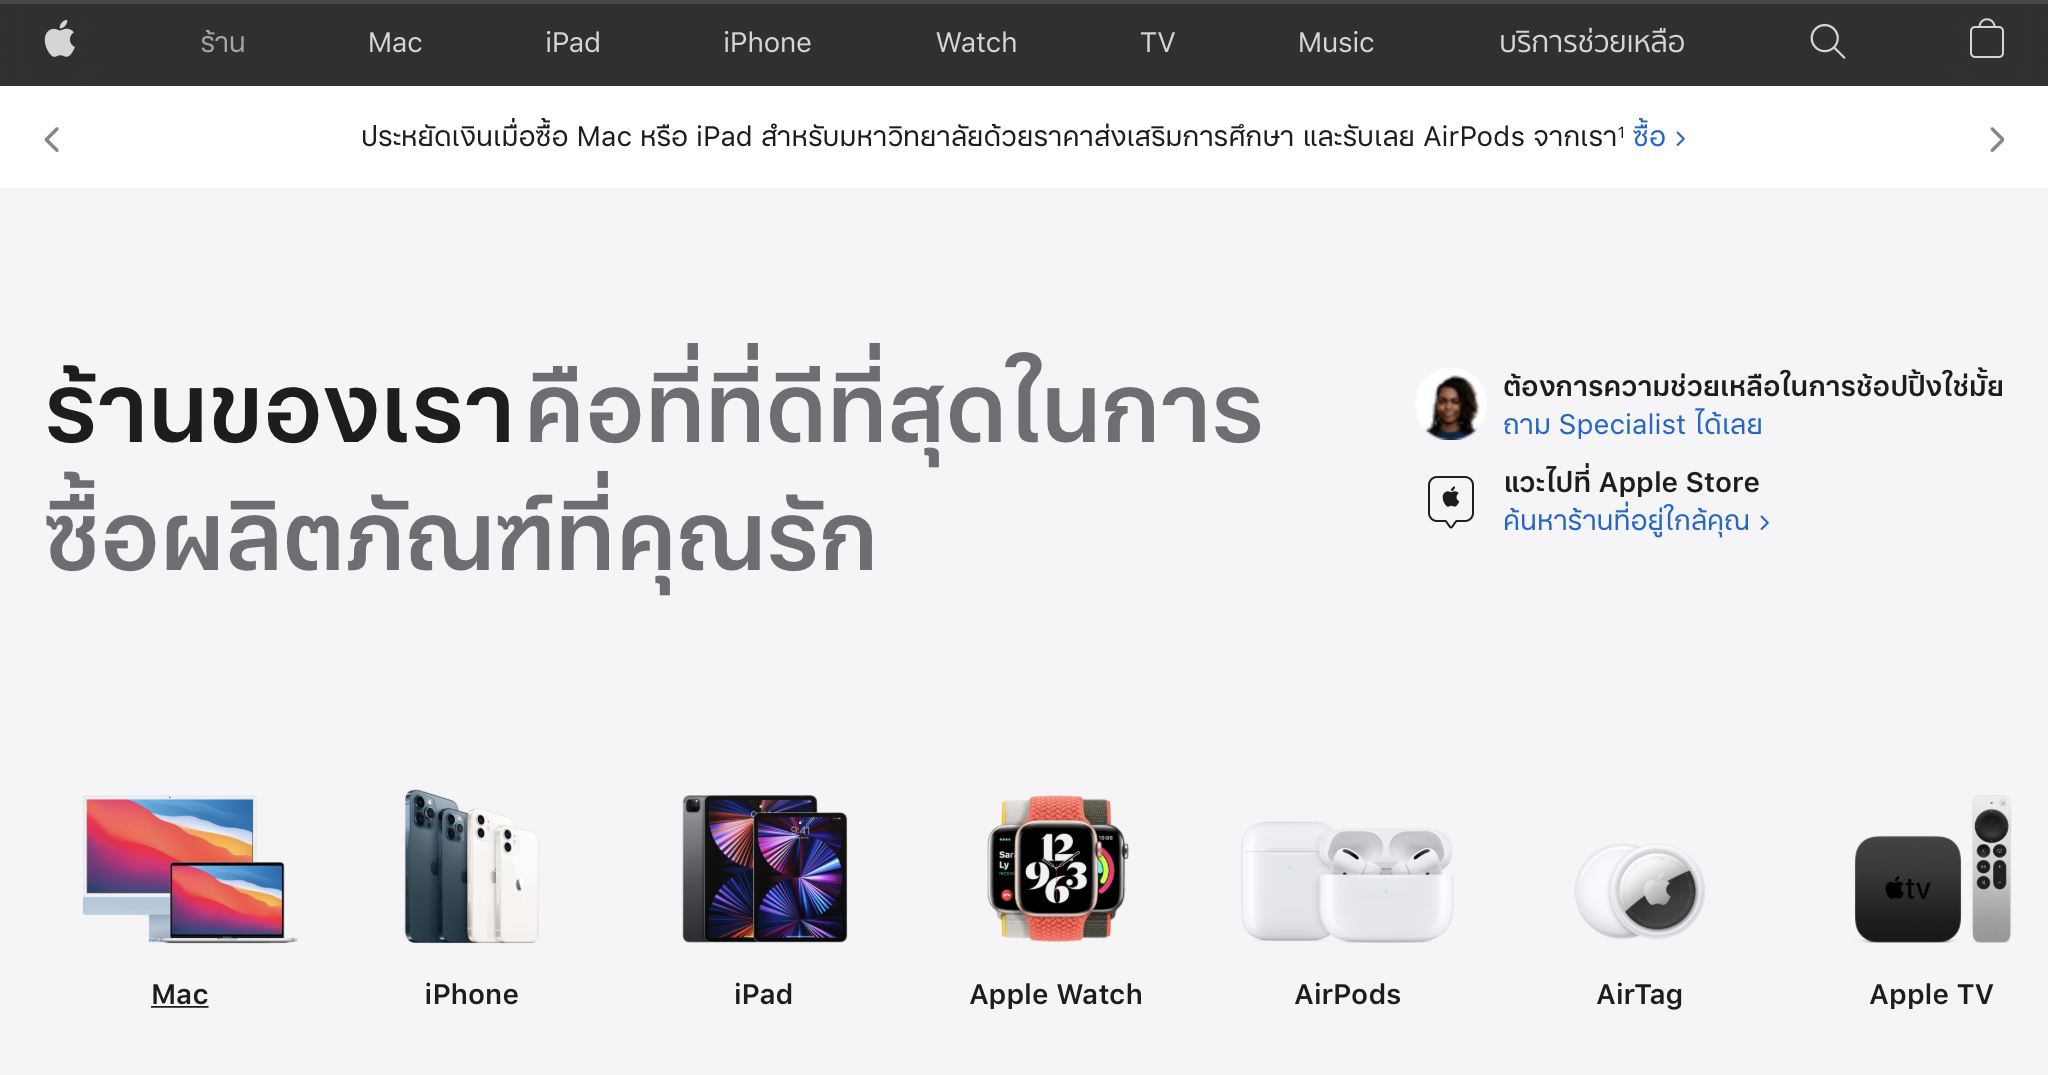 alt="Apple Online Store"